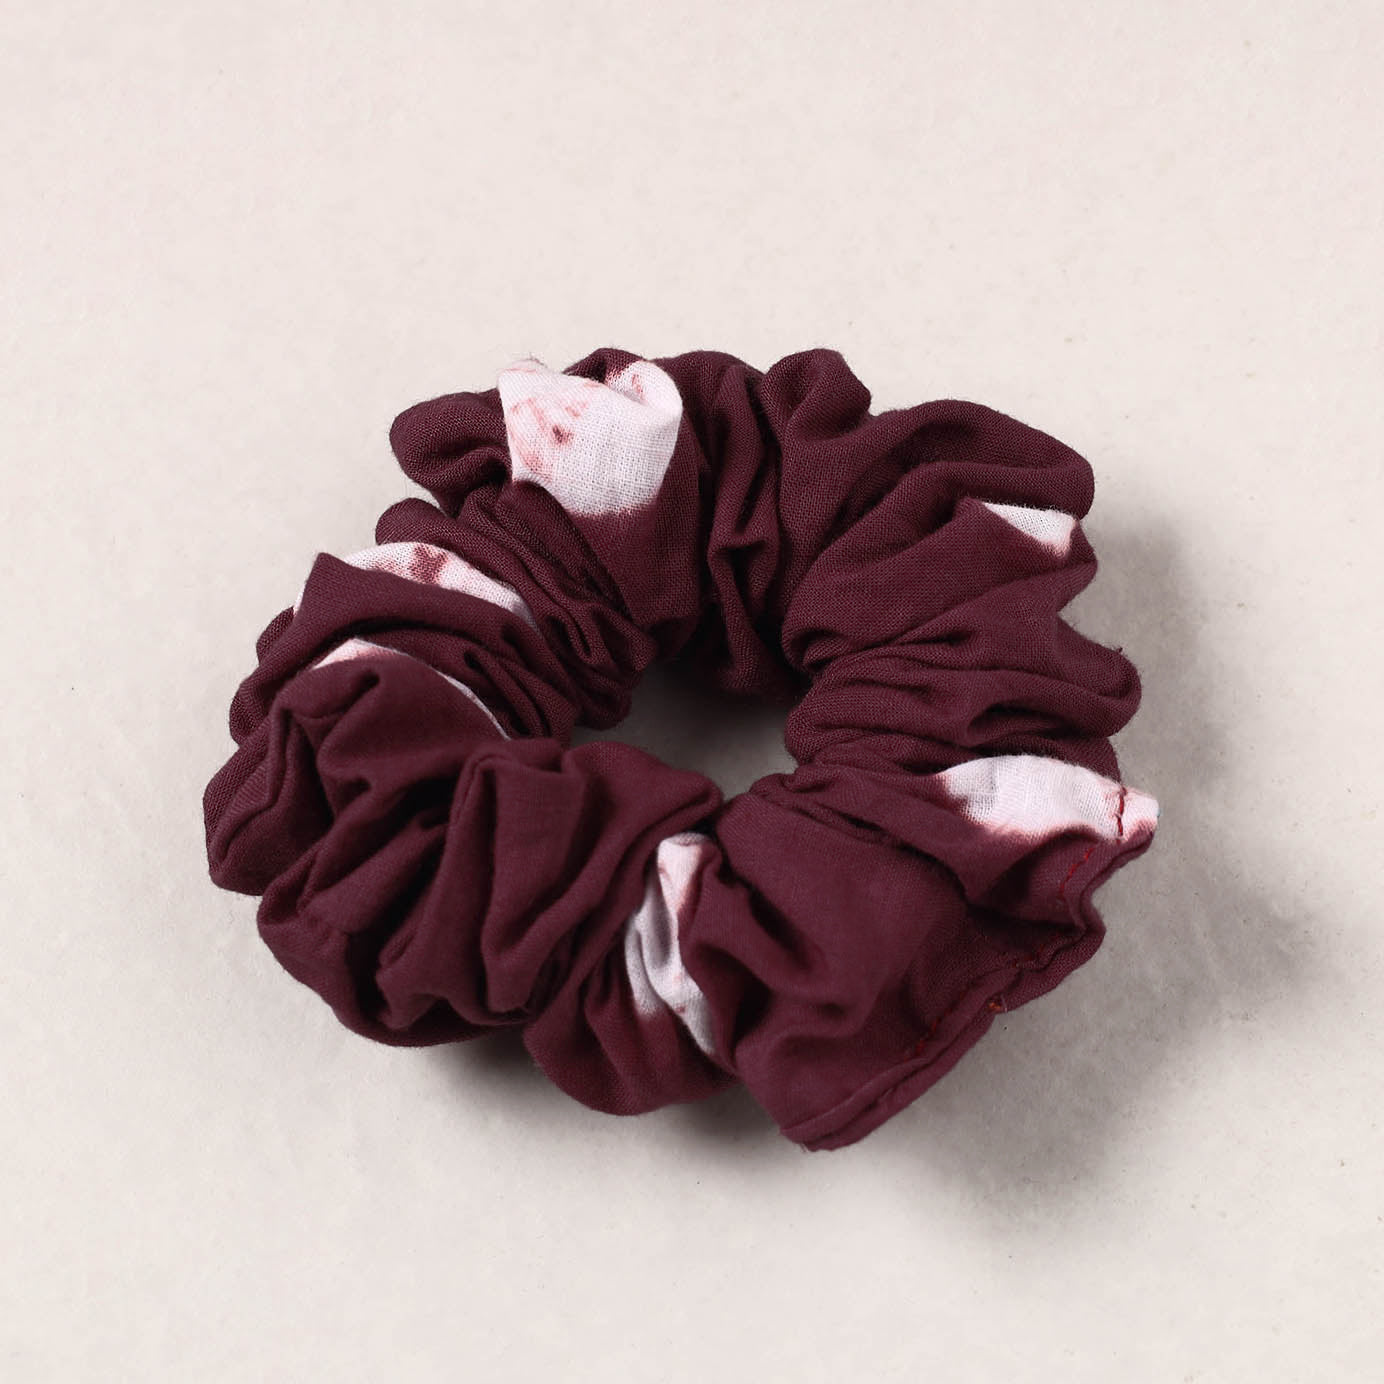 Shibori Dyed Elastic Rubber Band/Scrunchie